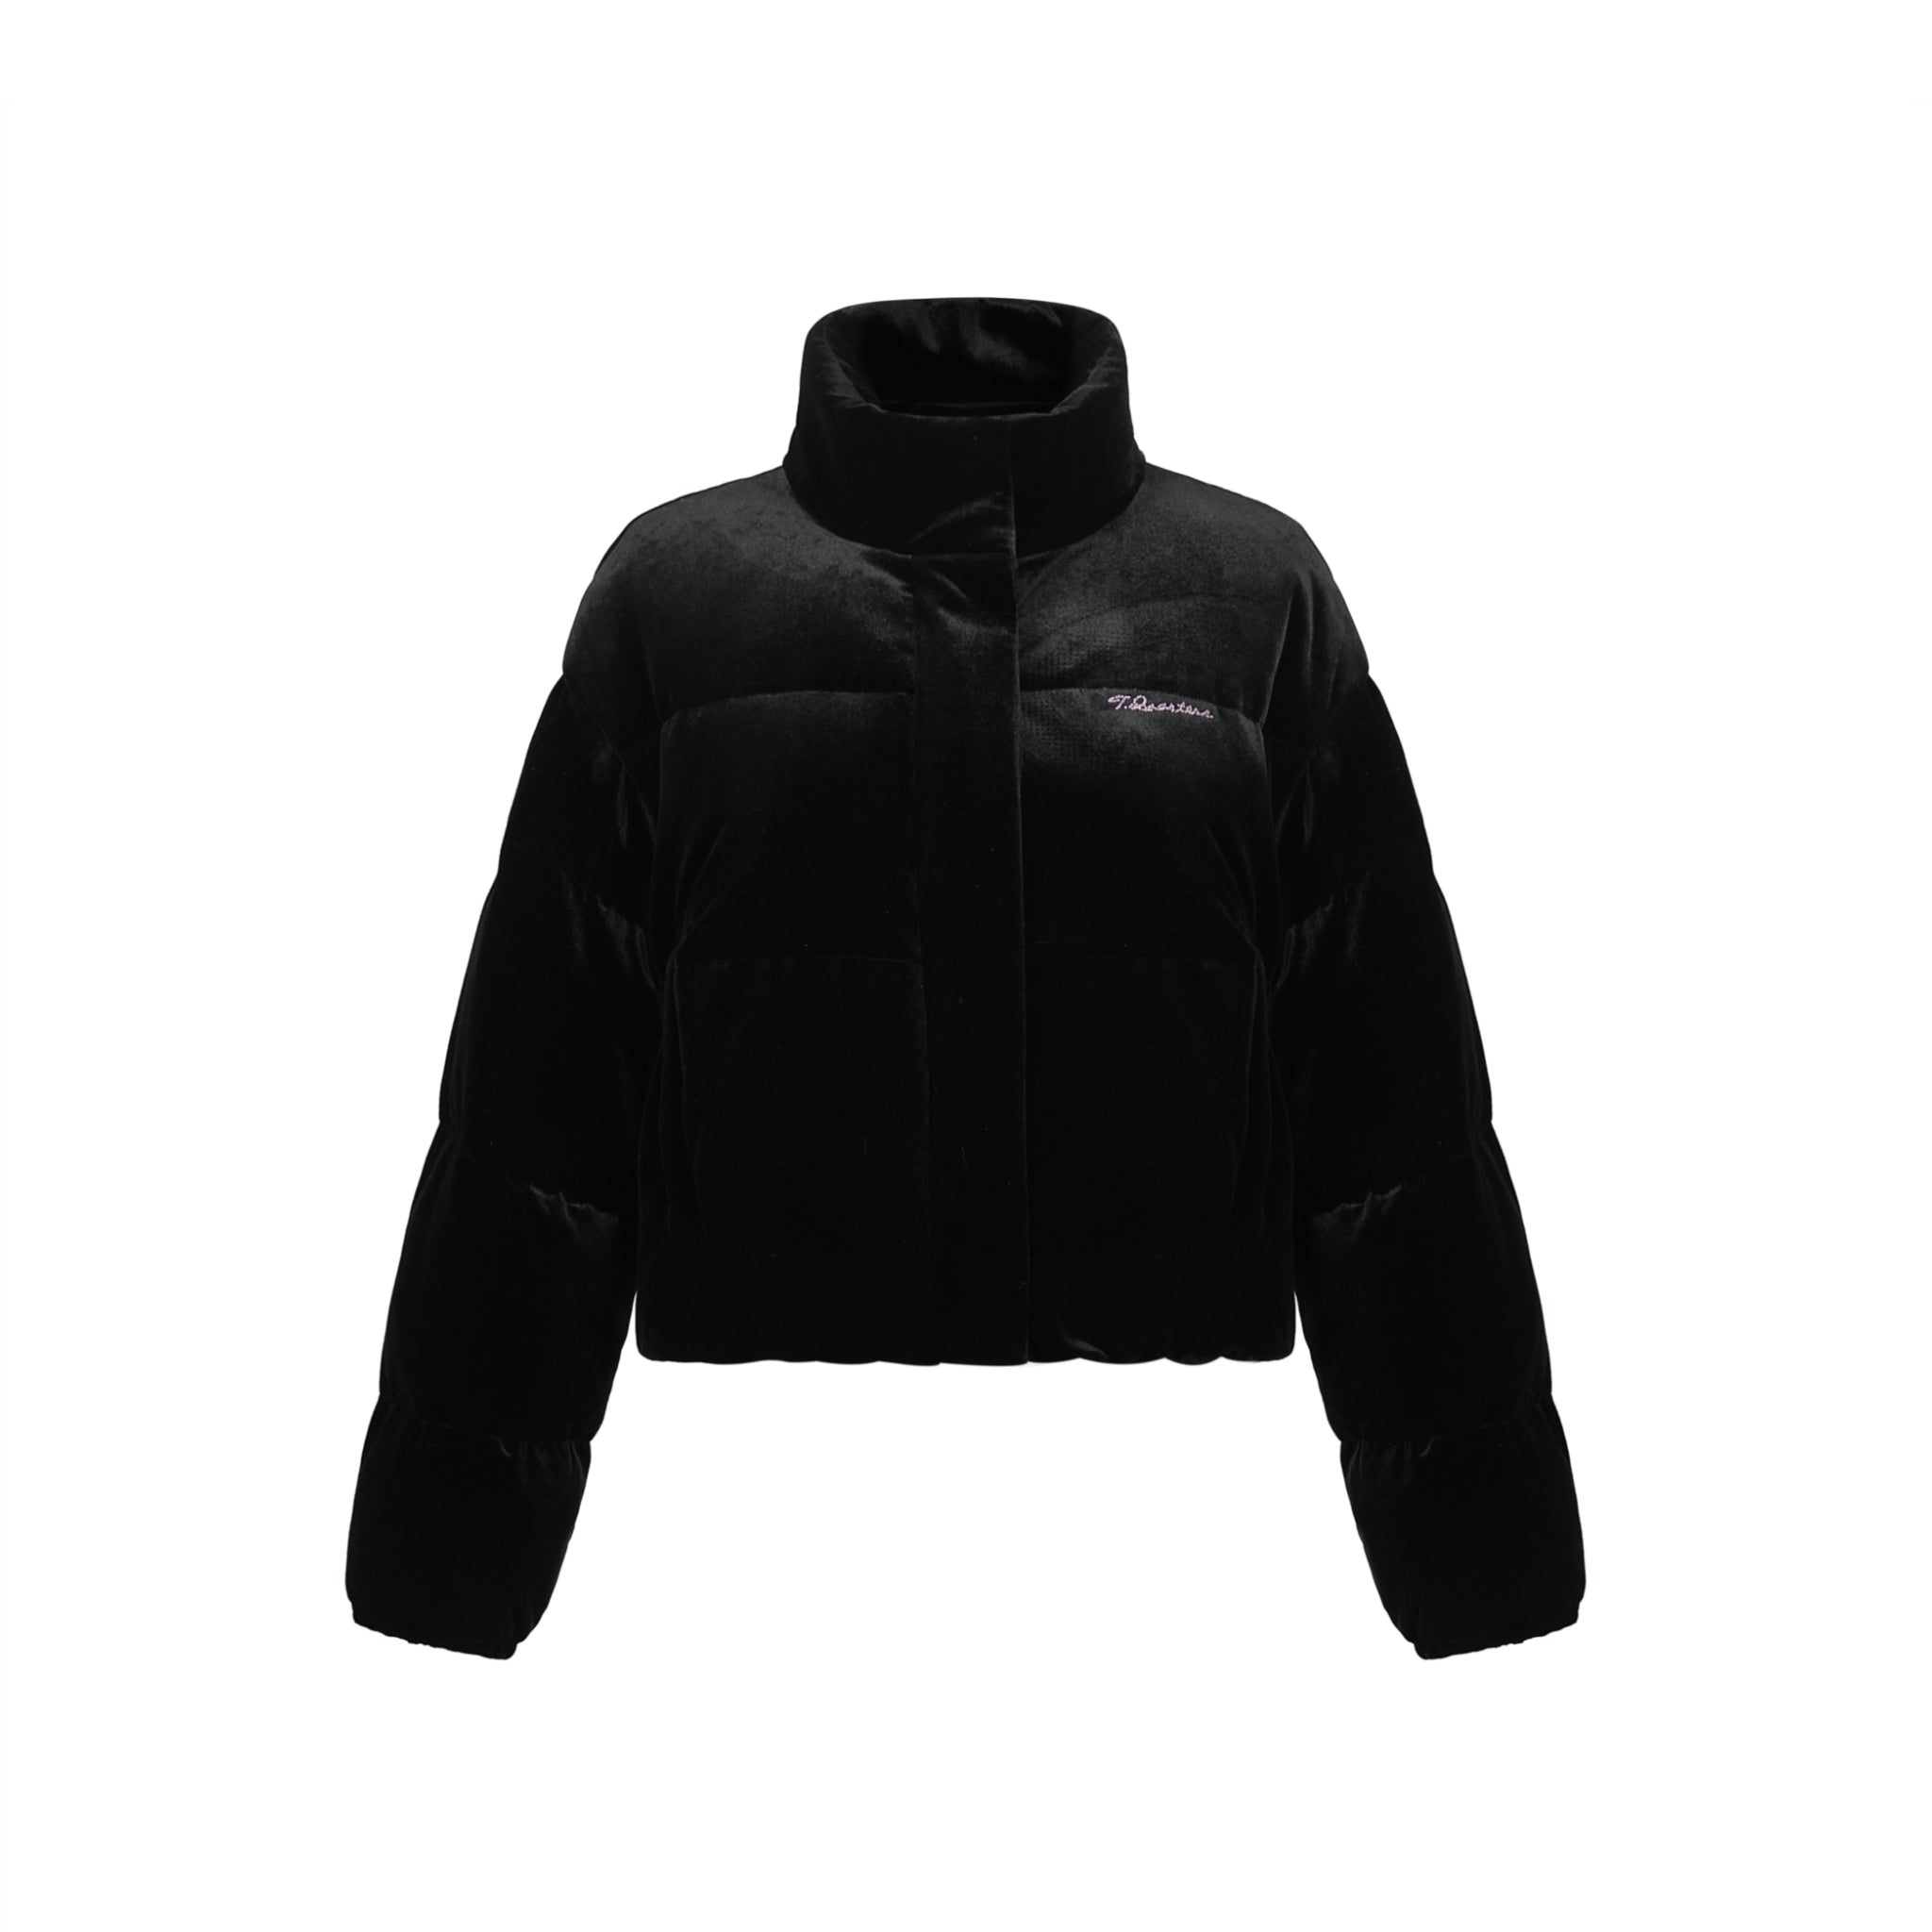 MARRKNULL Black Corset Suit Jacket